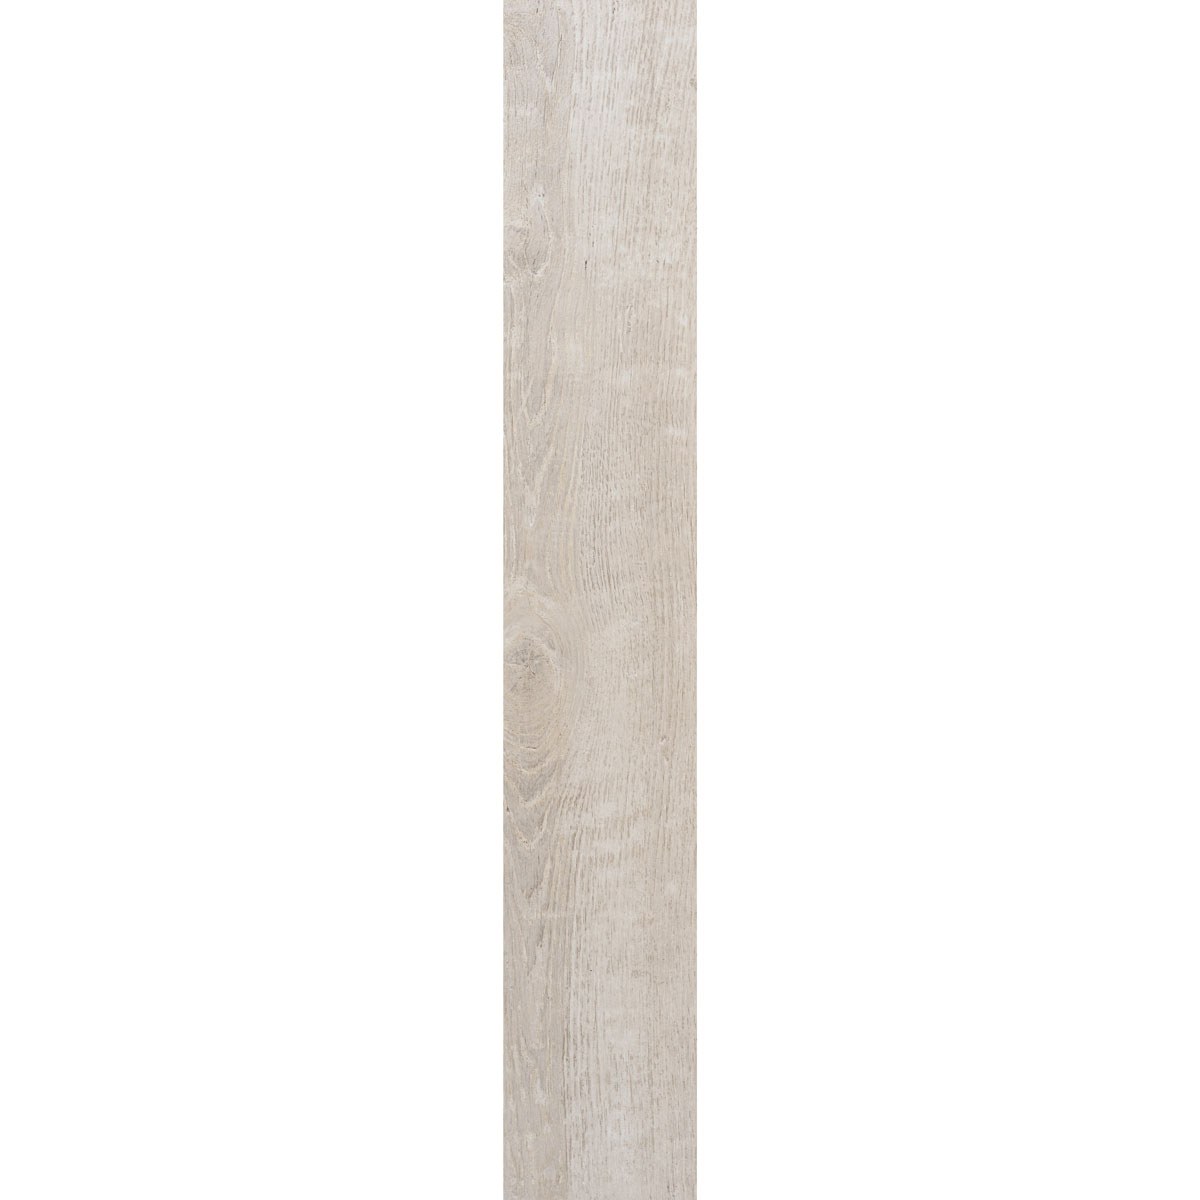 Weathered Oak Almond Plank, product variant image